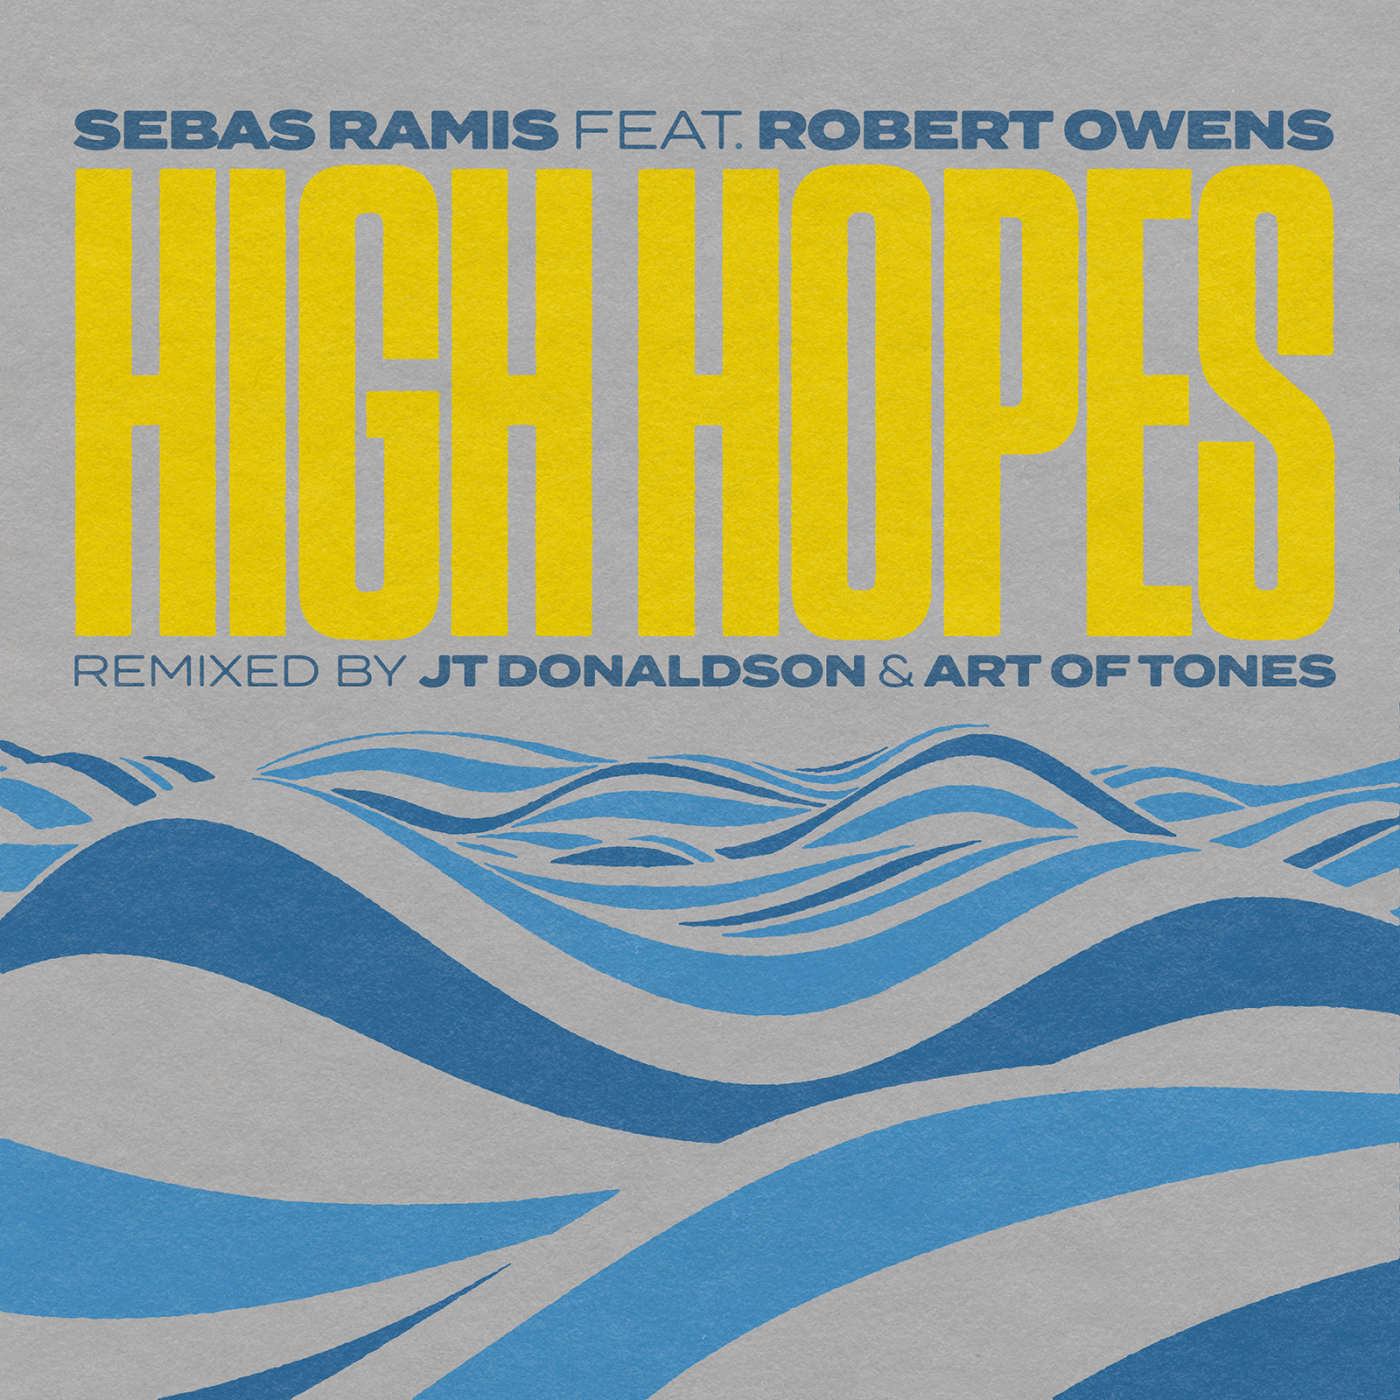 Tone remix. Robert Owens Dub Mix. Set Fire feat. Robert Owens Dub Mix.